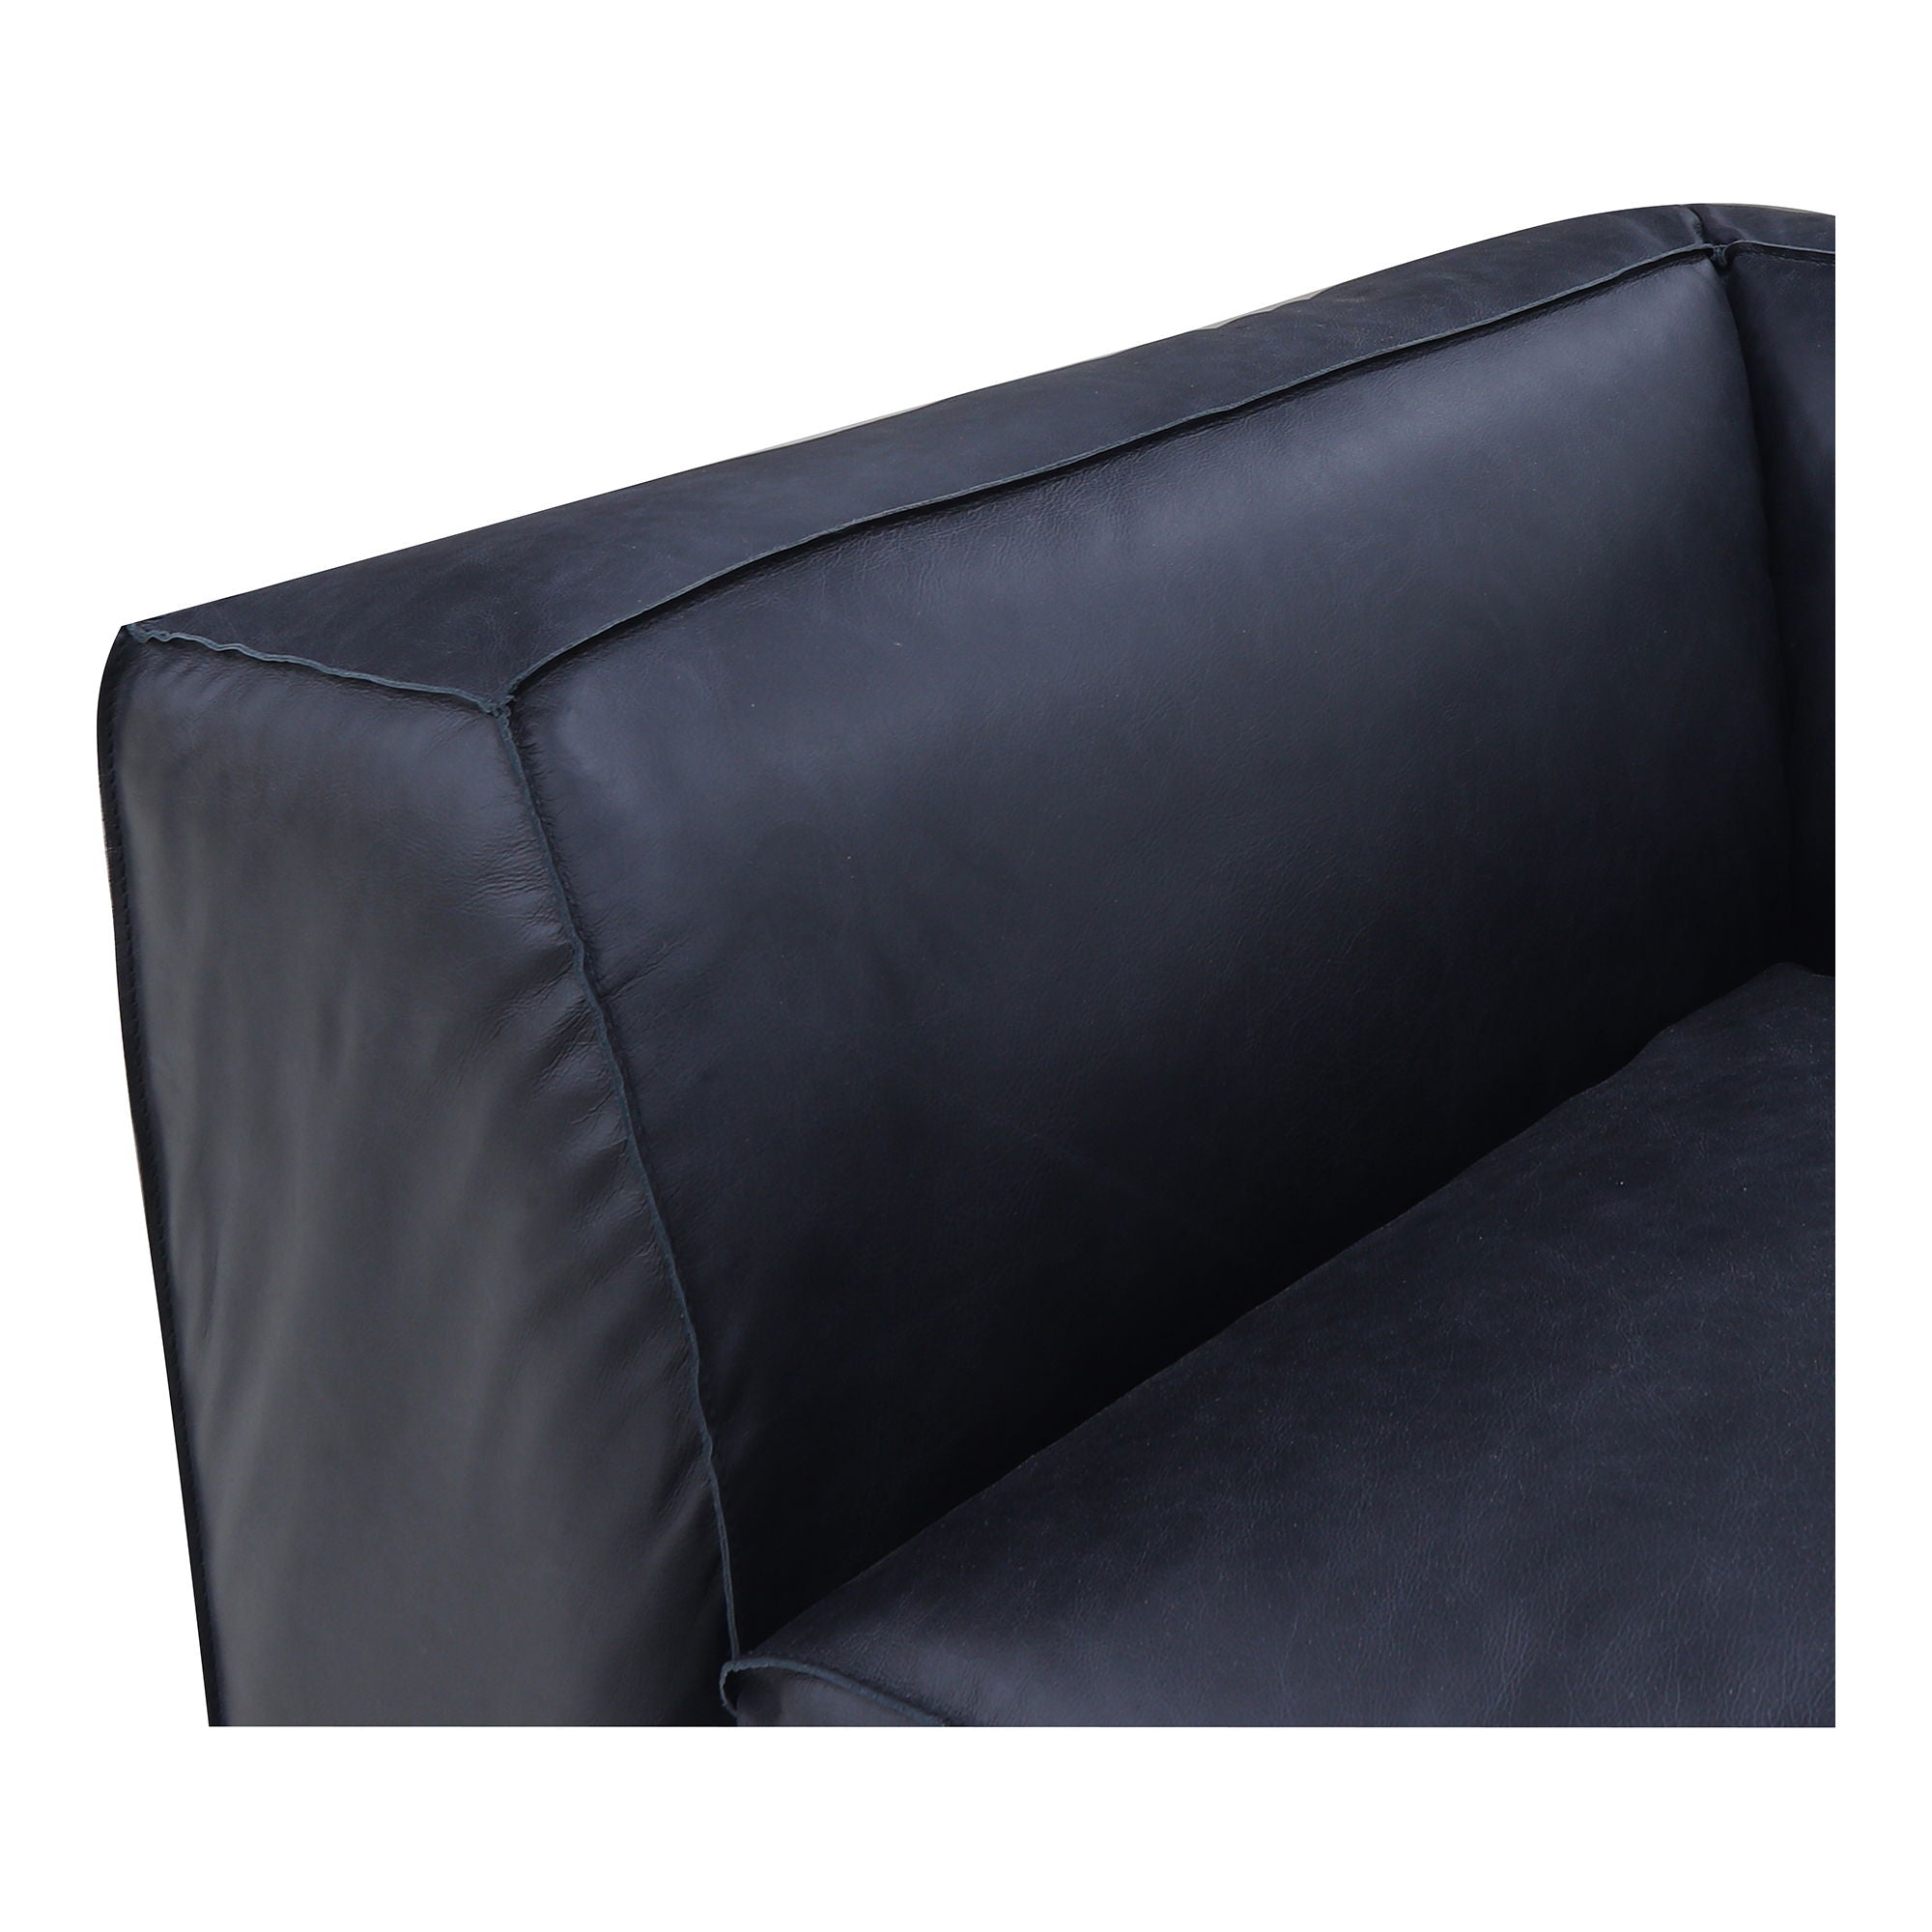 Form - Lounge Modular Sectional Vantage Black Leather